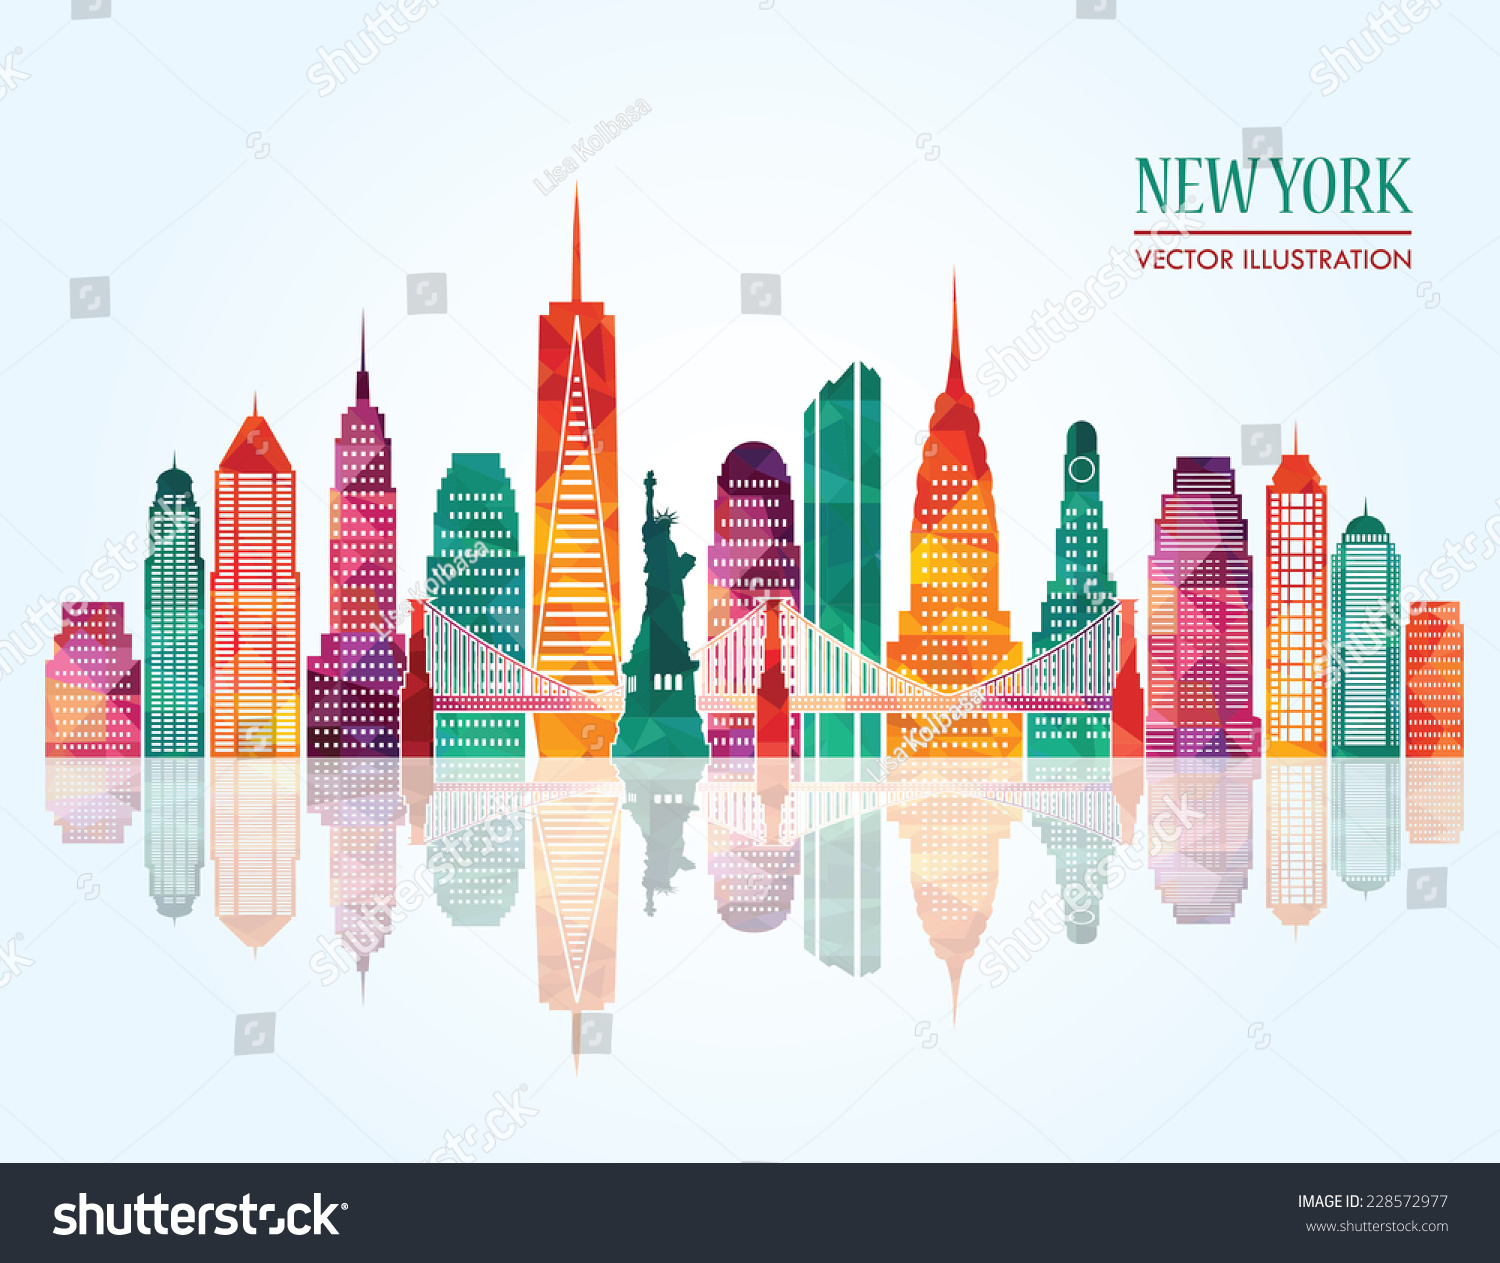 SVG of New York city. Vector illustration svg